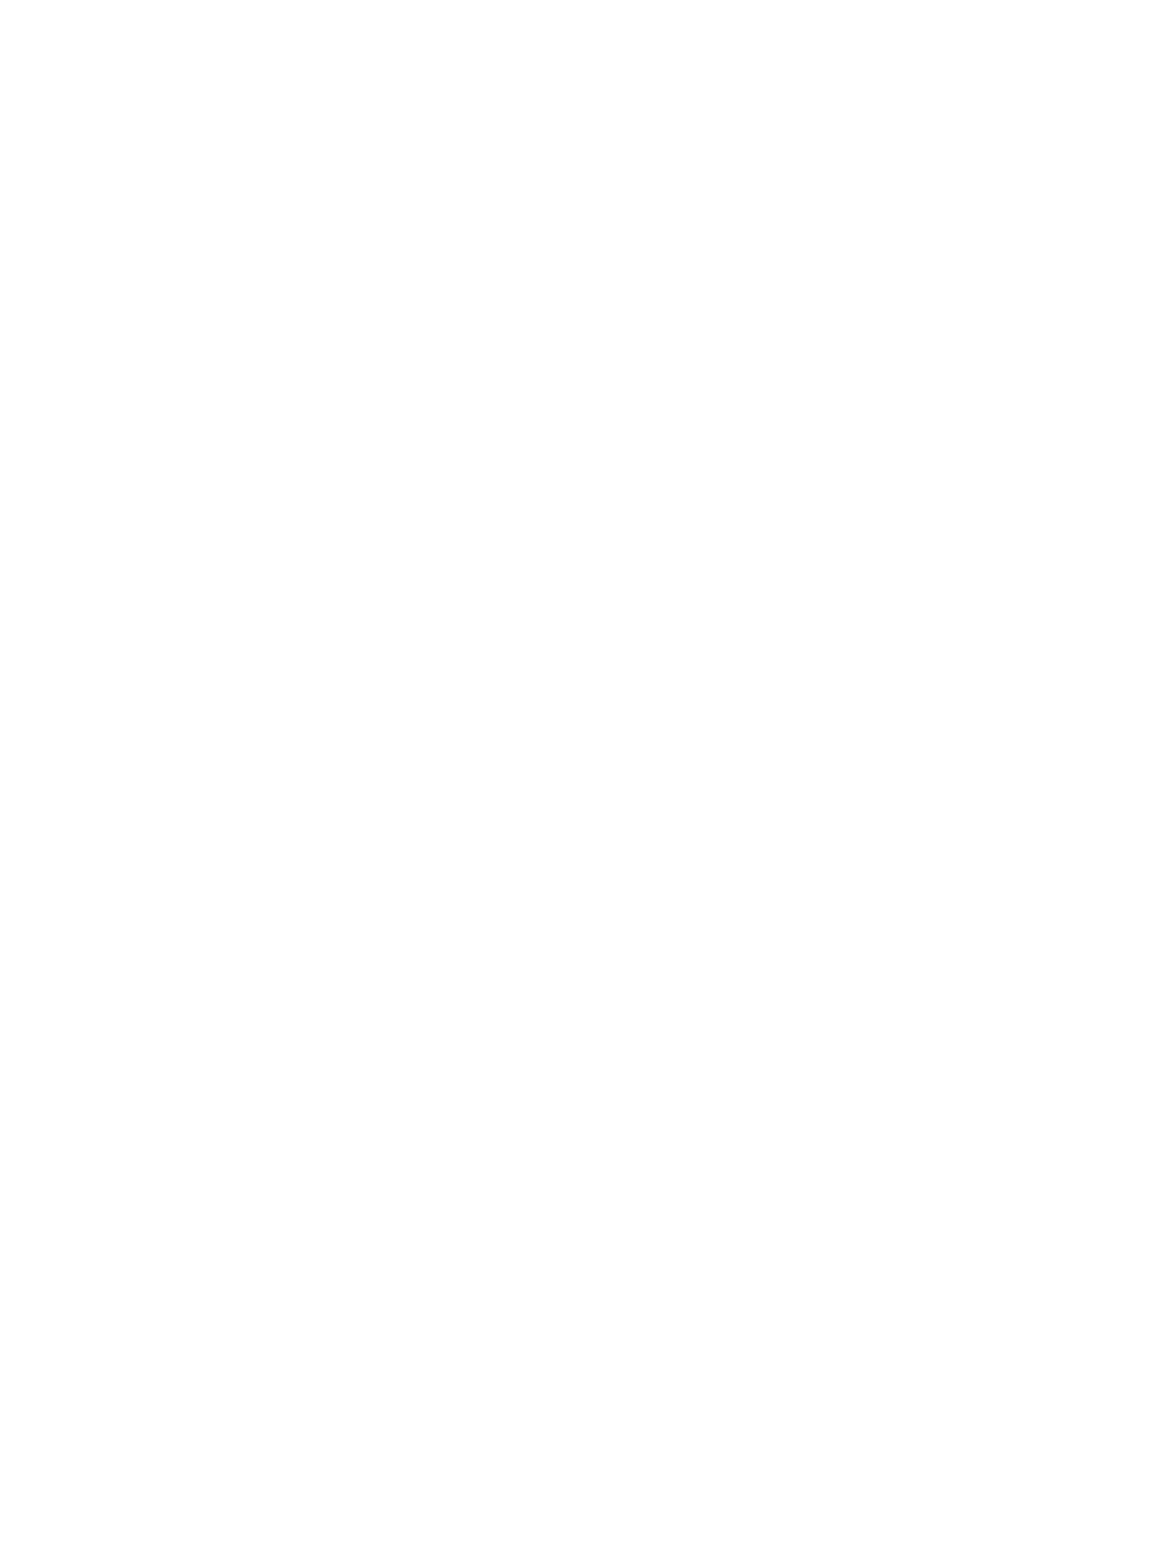 SYNLAB logo pour fonds sombres (PNG transparent)